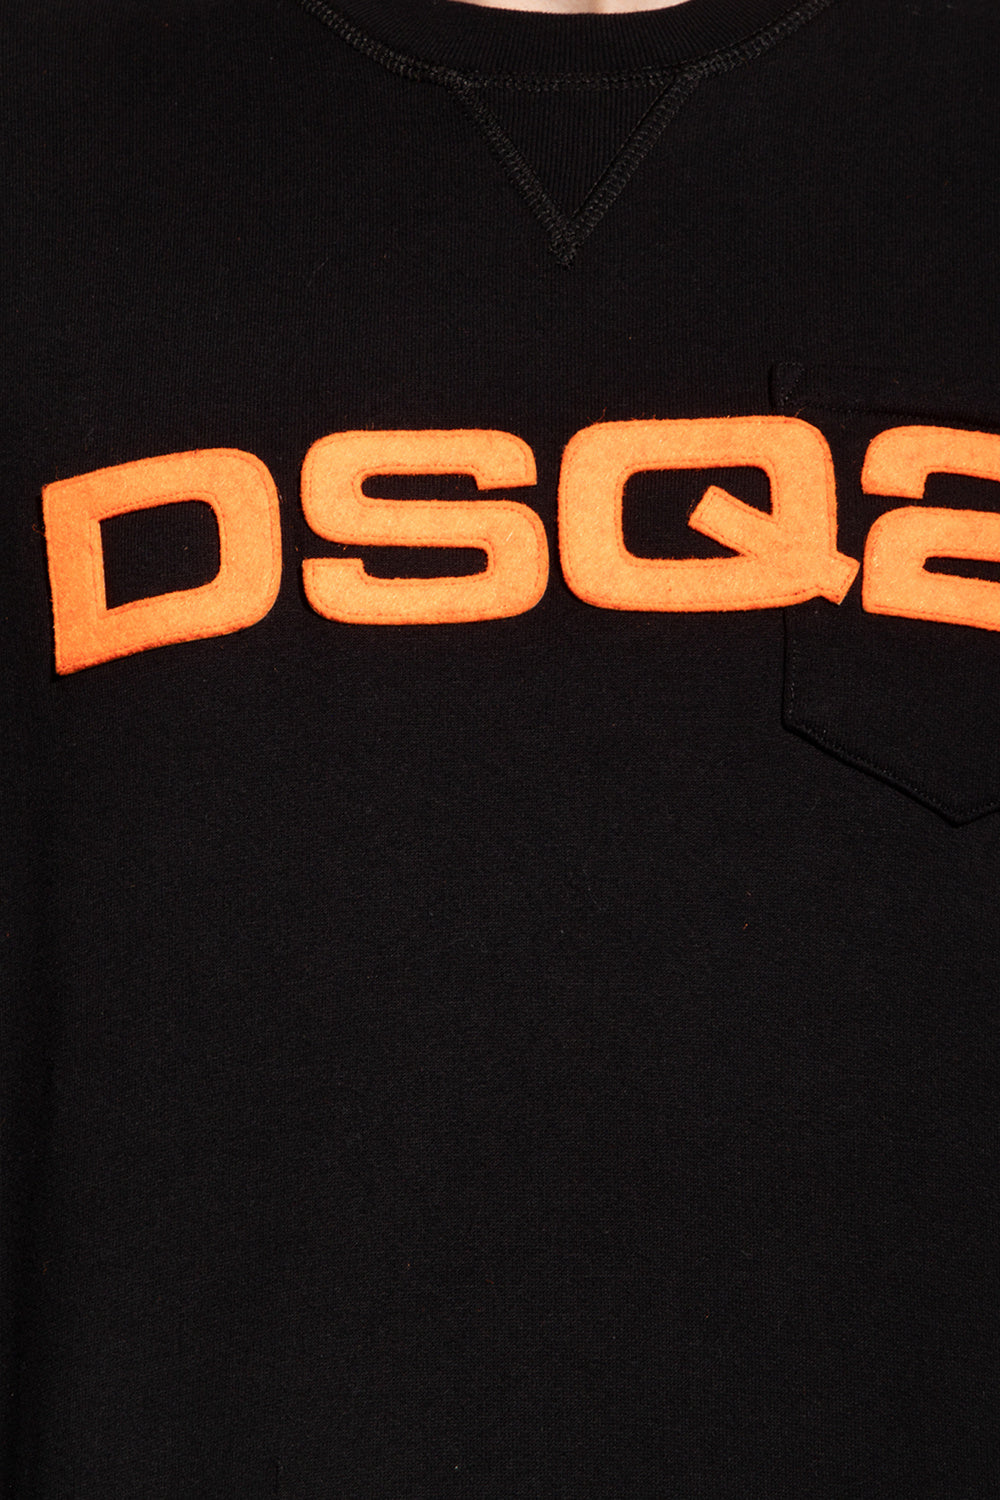 Dsquared2 DSQ2 Orange Patch Sweatshirt in Black